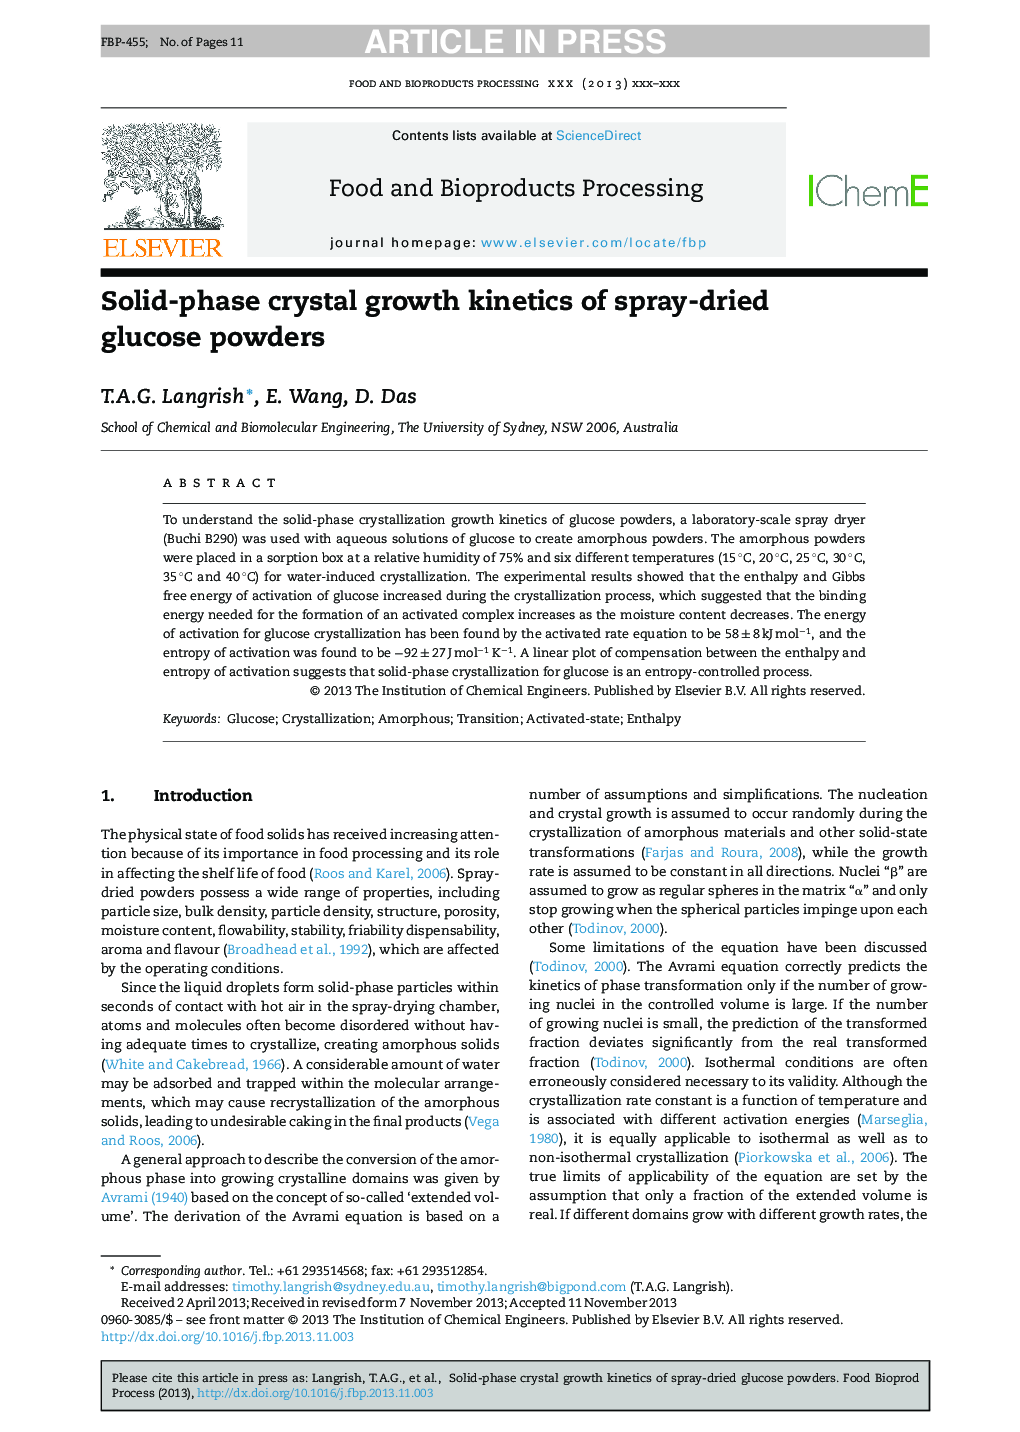 Solid-phase crystal growth kinetics of spray-dried glucose powders